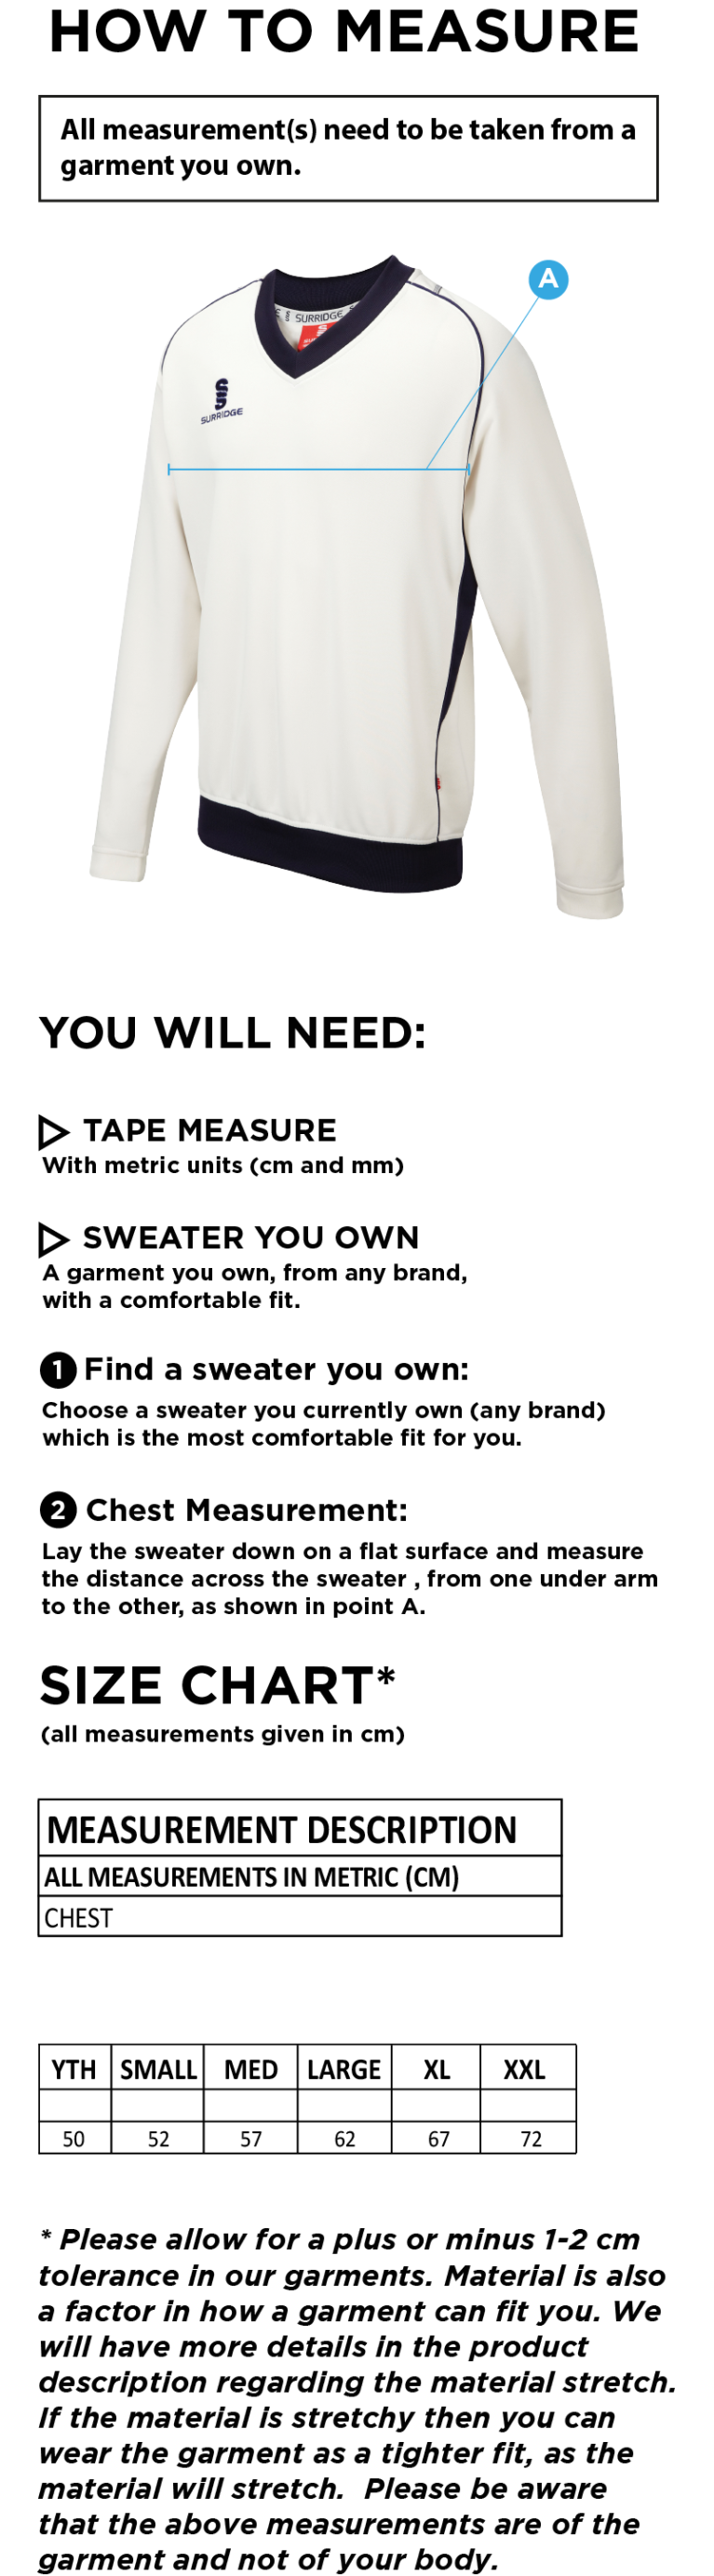 Maori Oxshott CC - Curve Long Sleeved Sweater - Size Guide